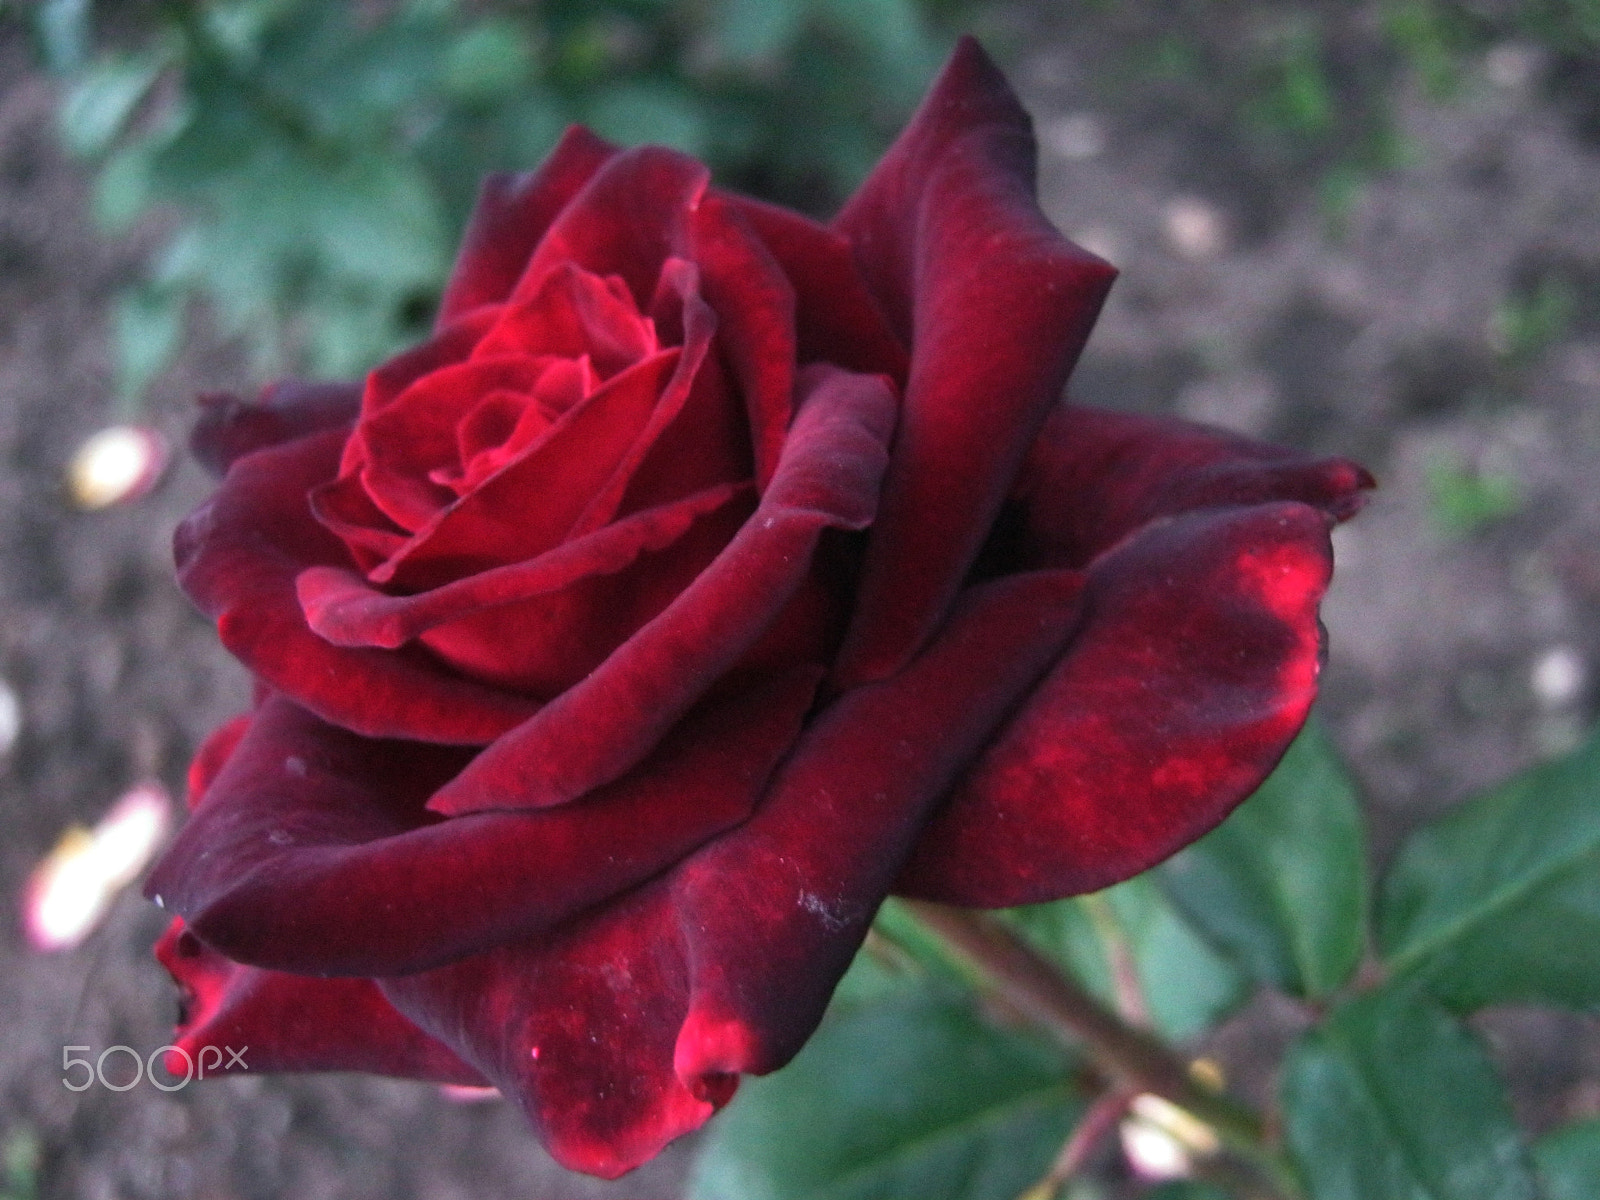 Canon PowerShot A800 sample photo. My favorite rose petals photography